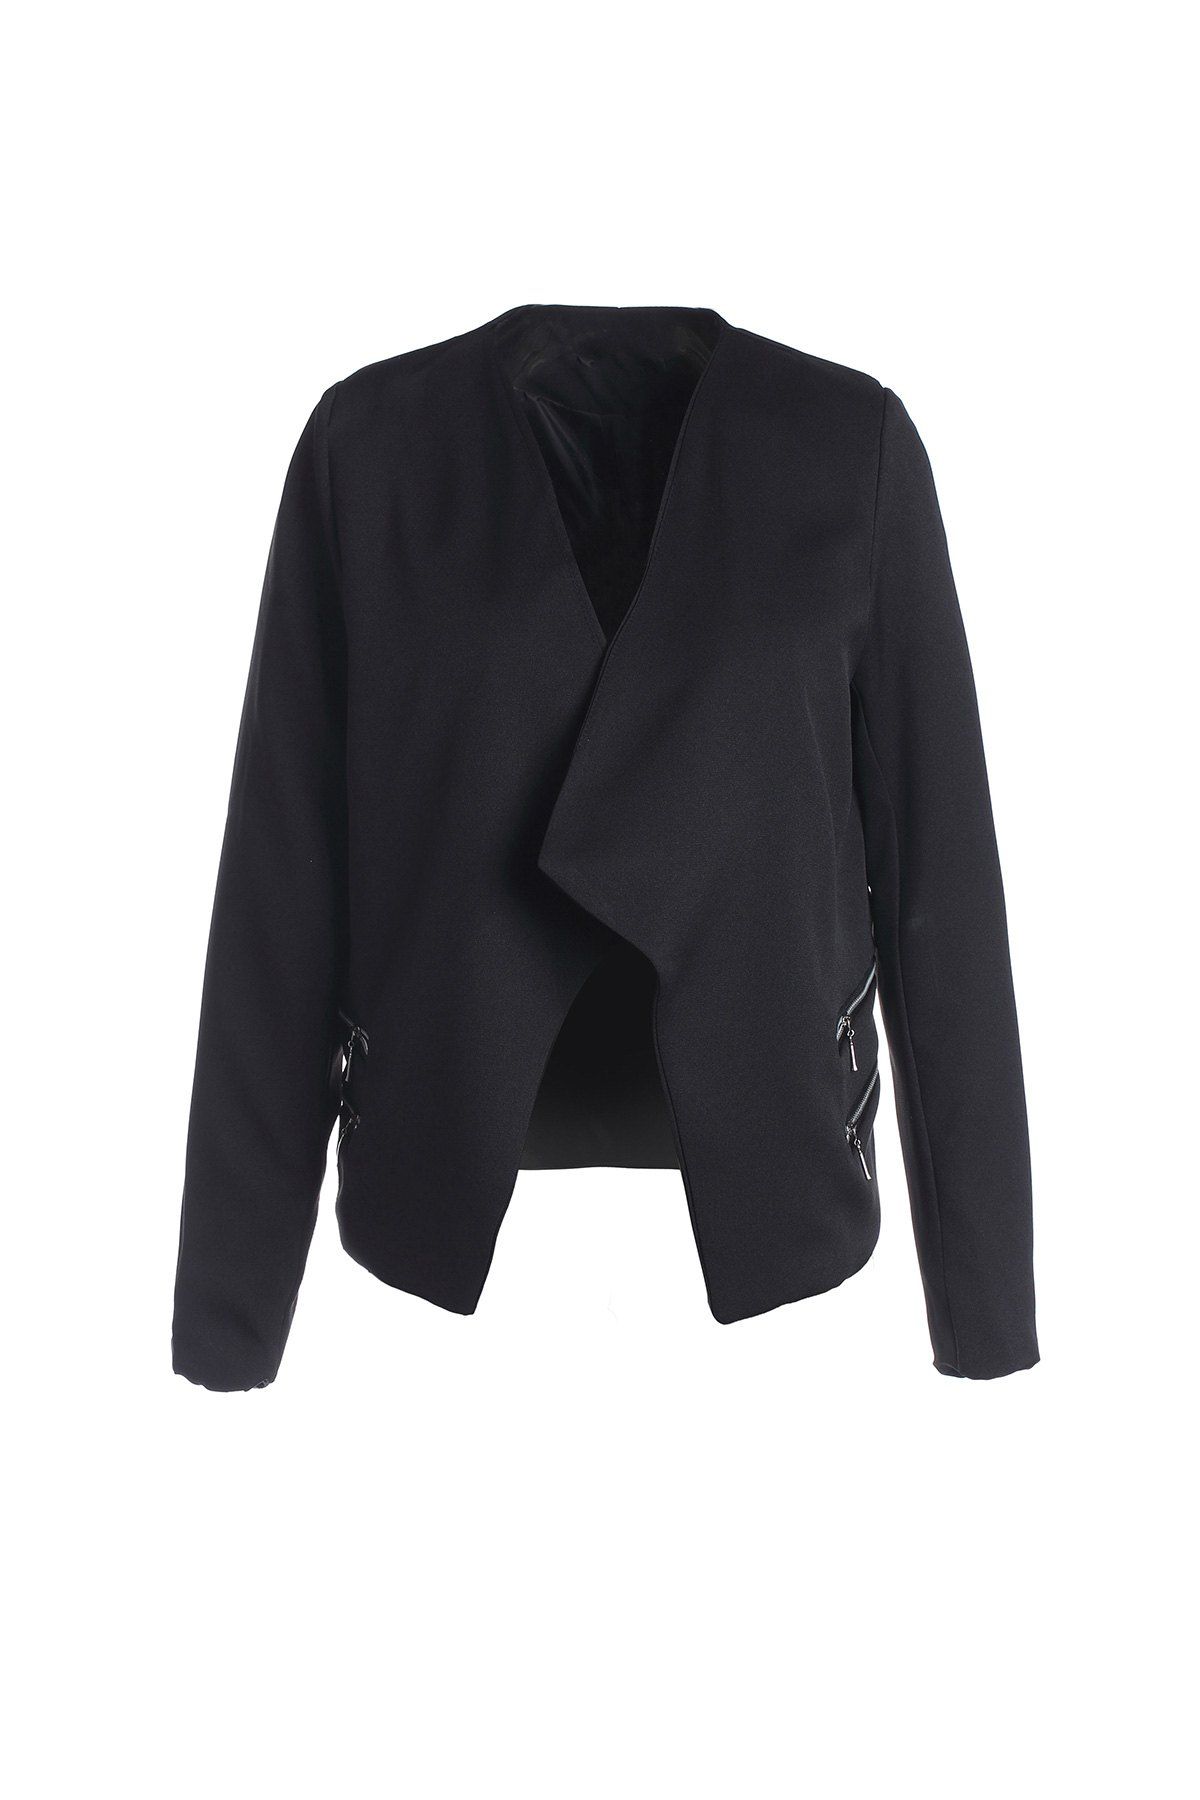 [89% OFF] Stylish Lapel Long Sleeve Zipper Design Women's Blazer | Rosegal